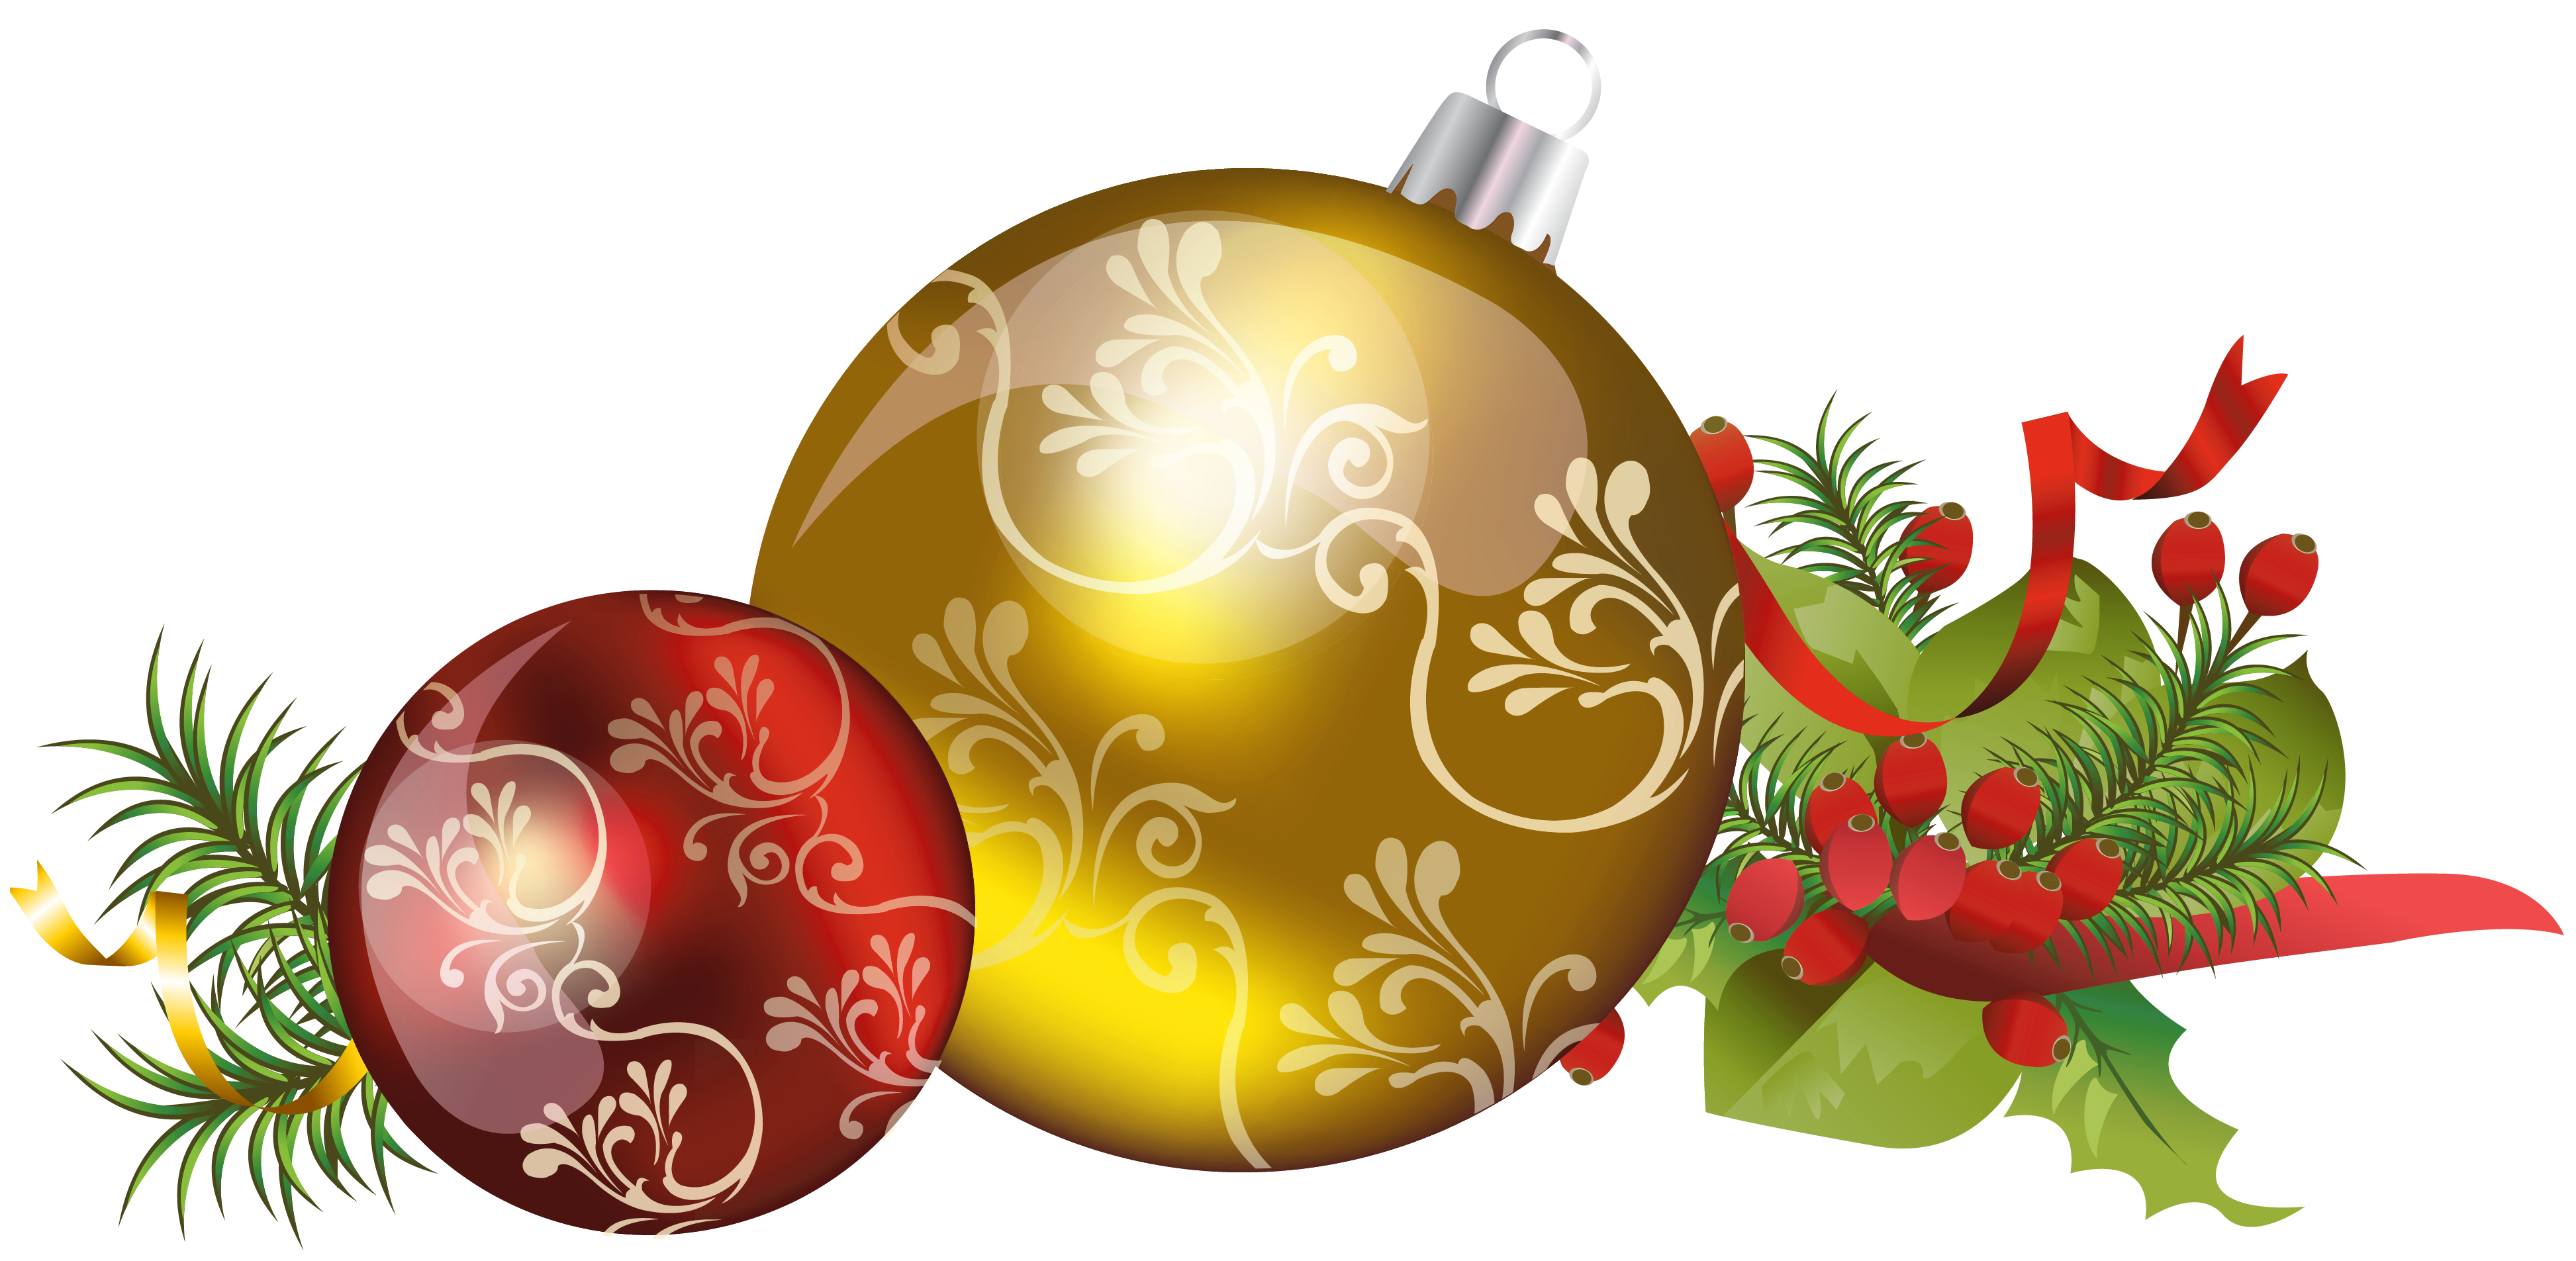 Рождественский мяч PNG Image